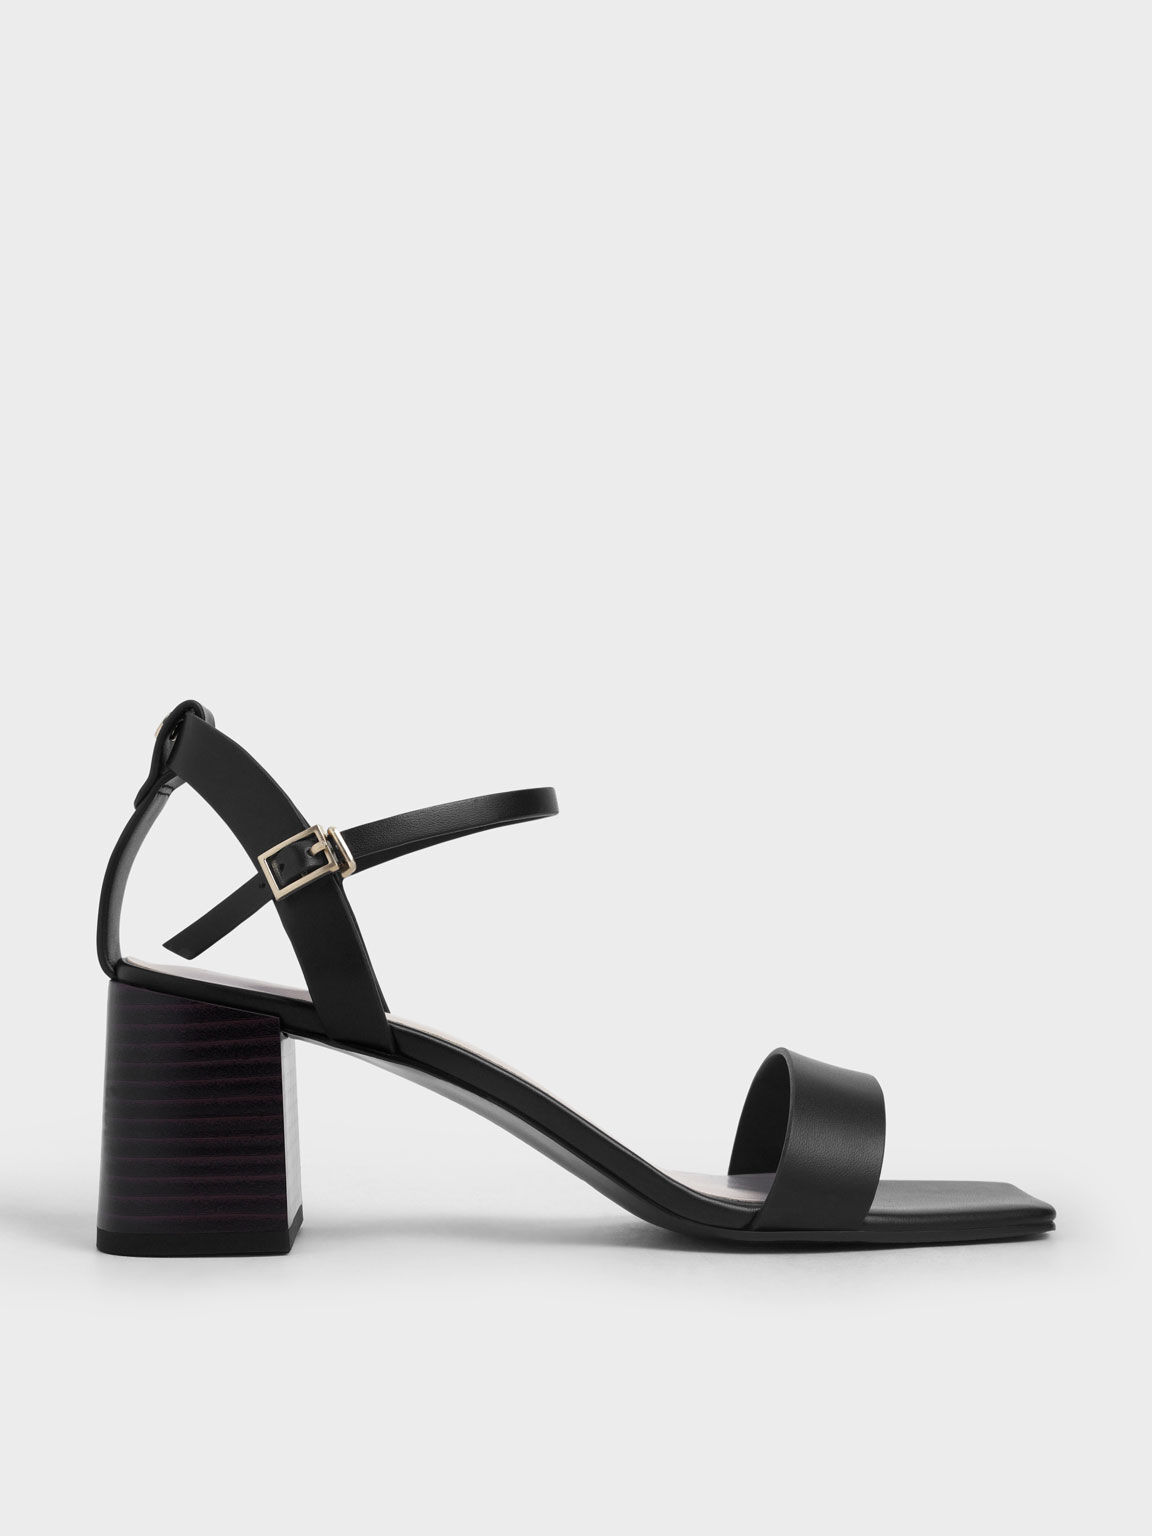 New York & Company | Shoes | Ny Co Black Sandals With Back Zipper | Poshmark